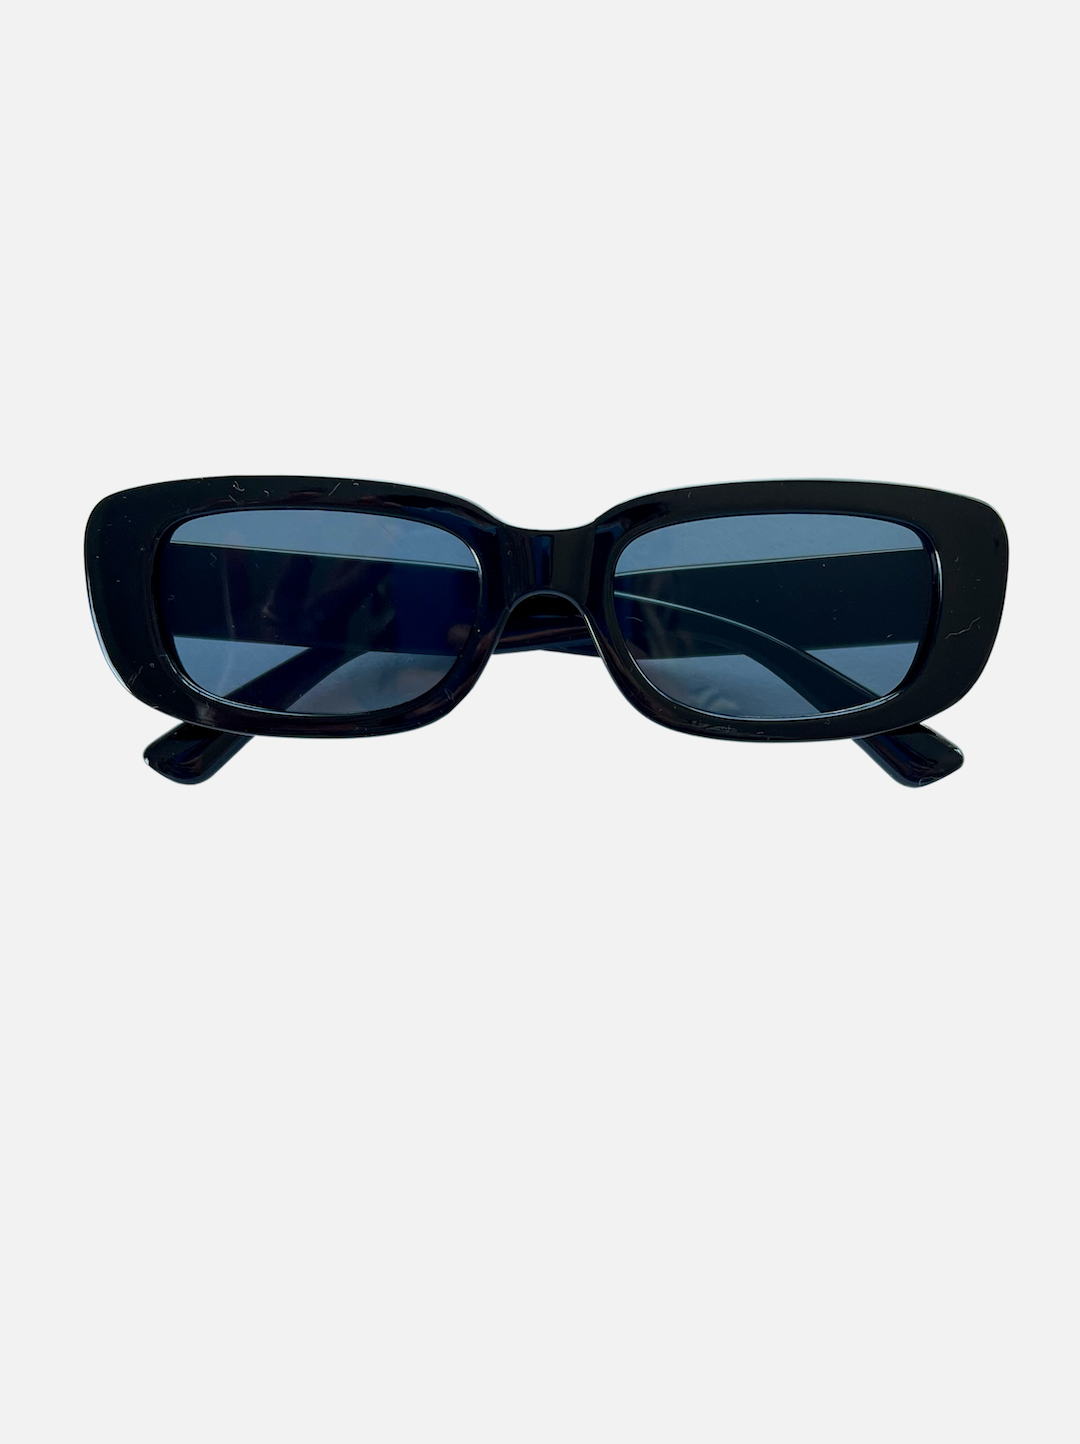 Black | A pair of kids' sunglasses with blue lenses inside black frames